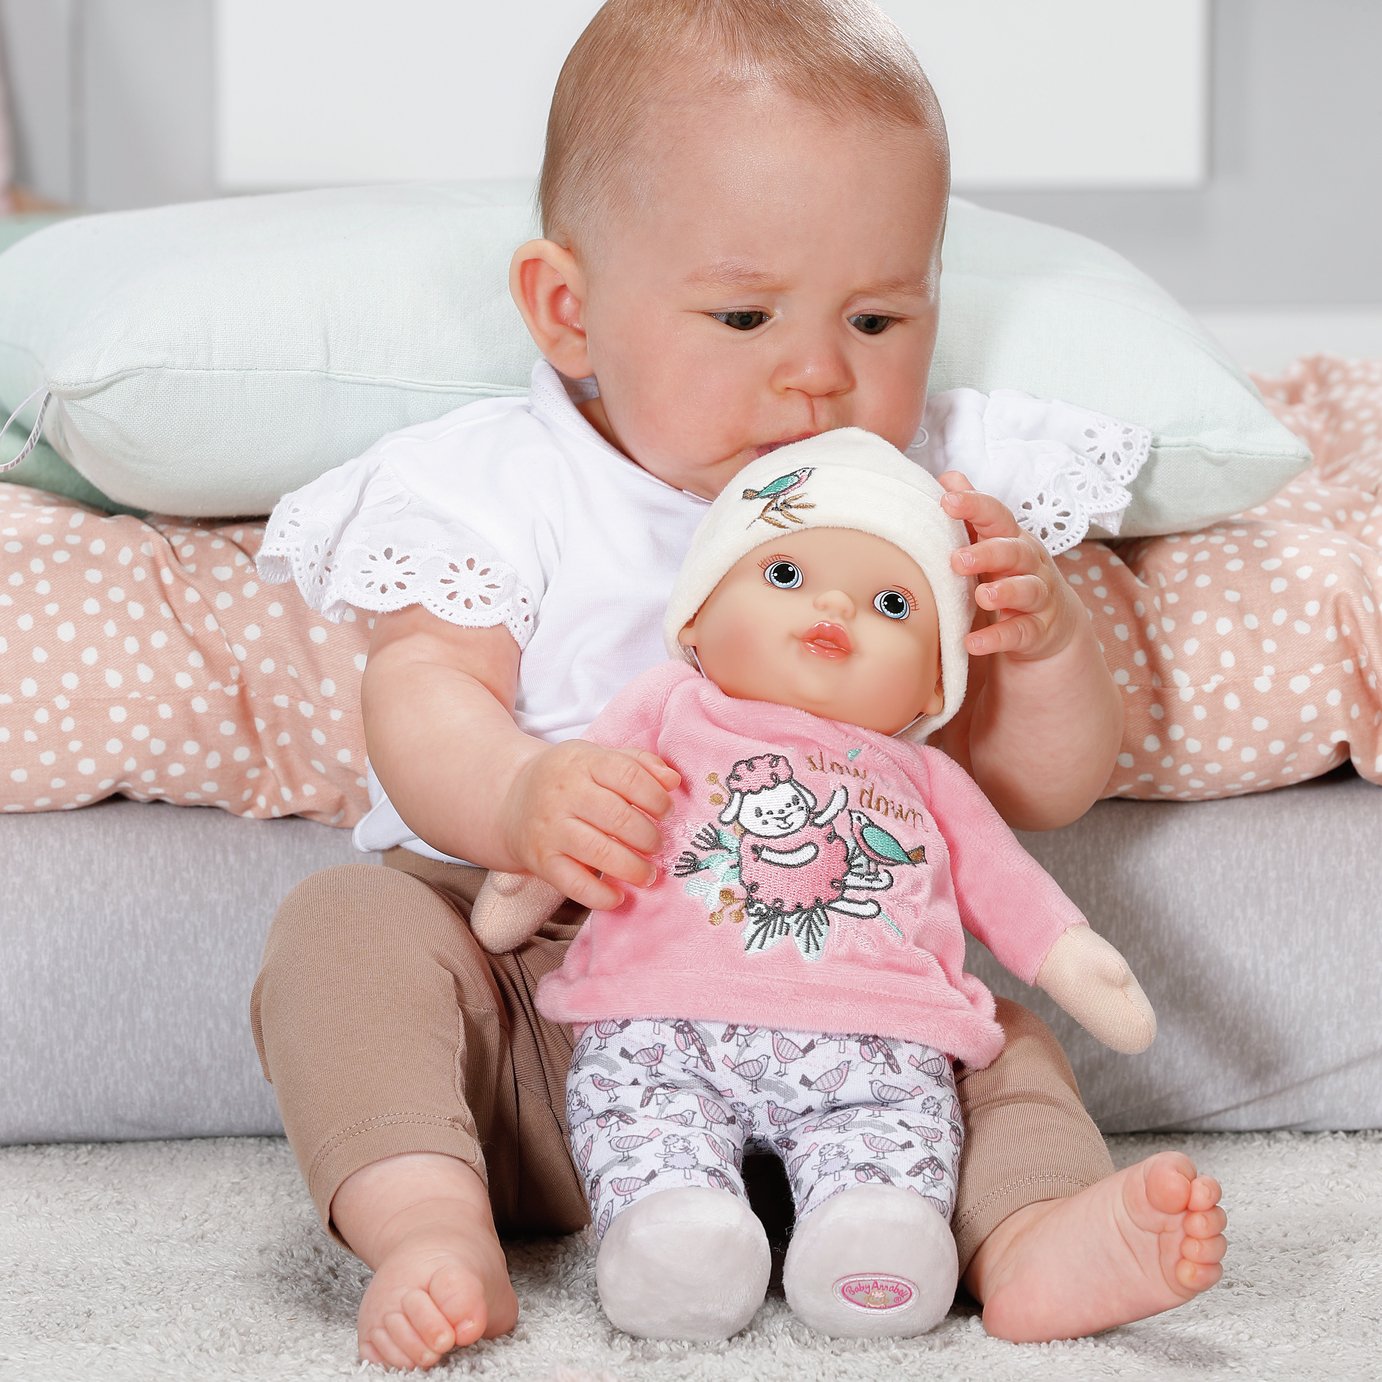 Baby Annabell Newborn Doll Reviews